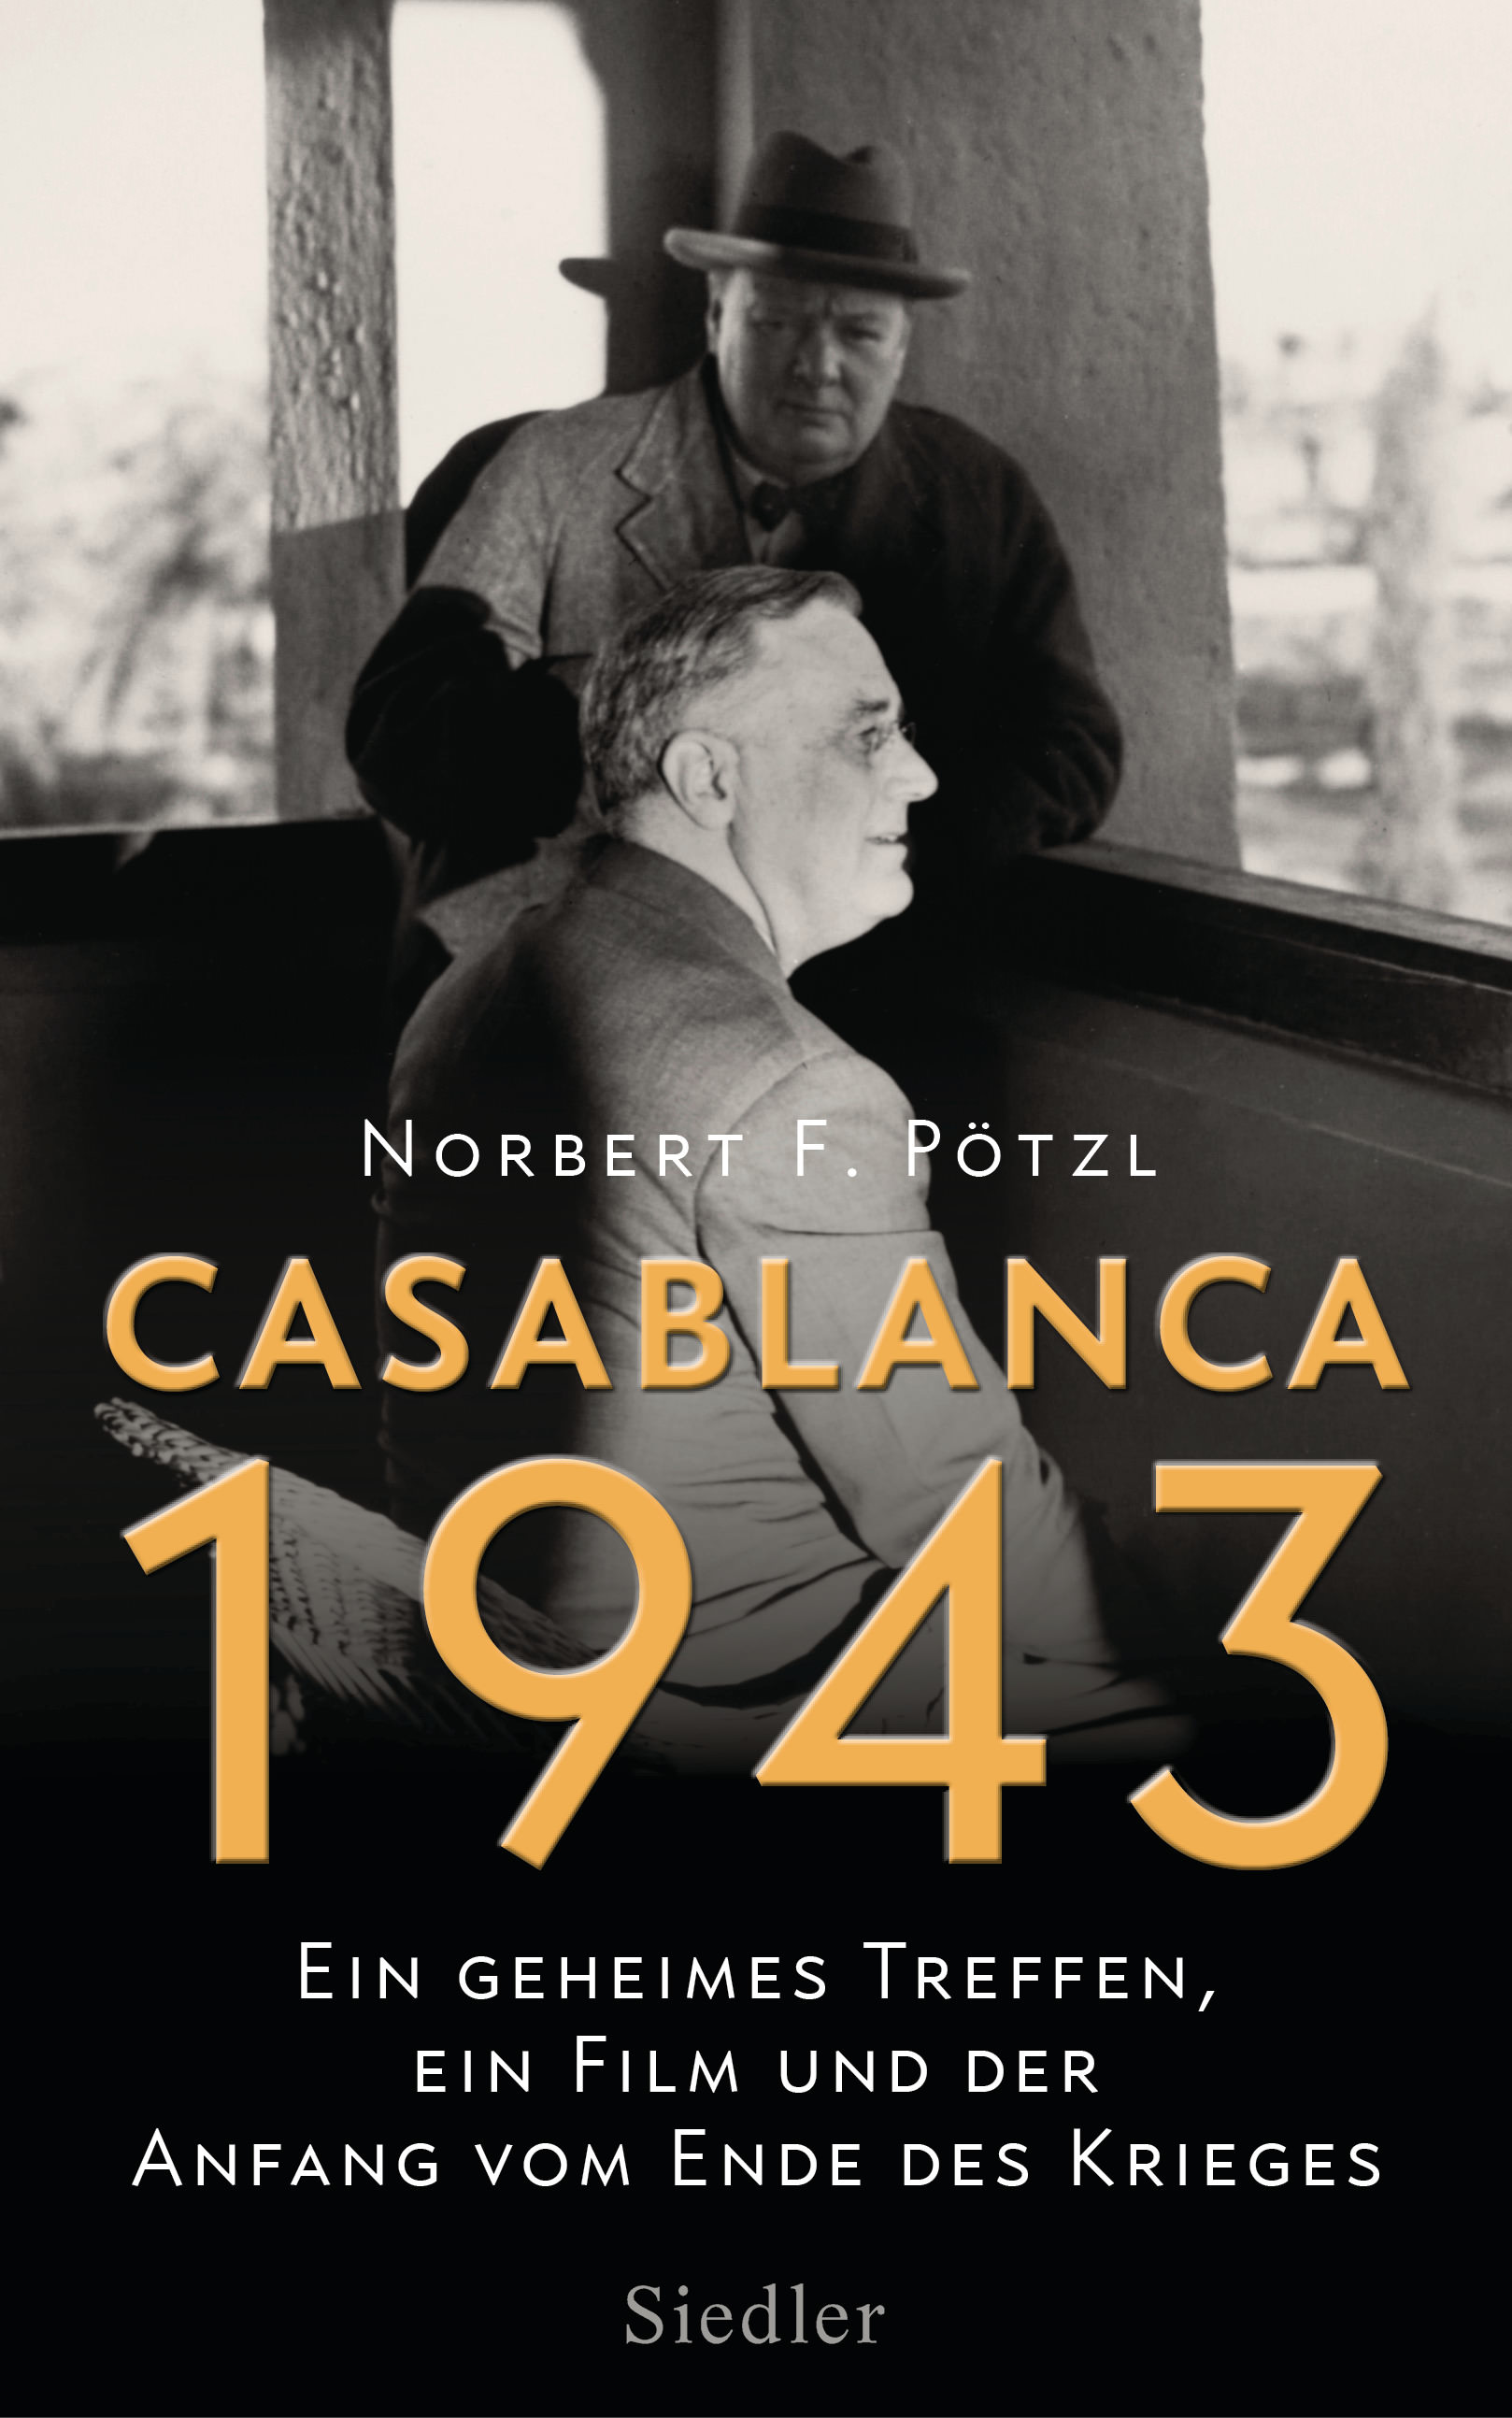 Buchcover: Norbert F. Pötzl: Casablanca 1943